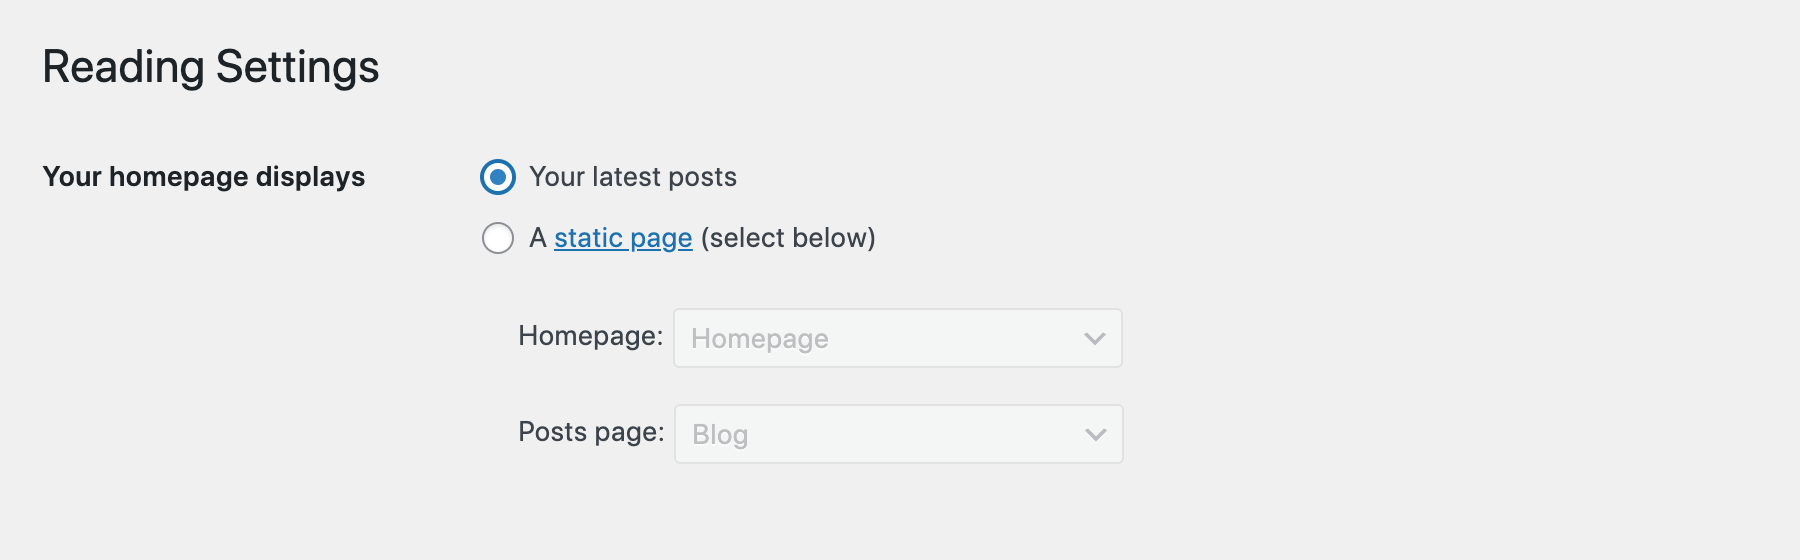 WordPress Reading Settings: Homepage Displays Latest Posts